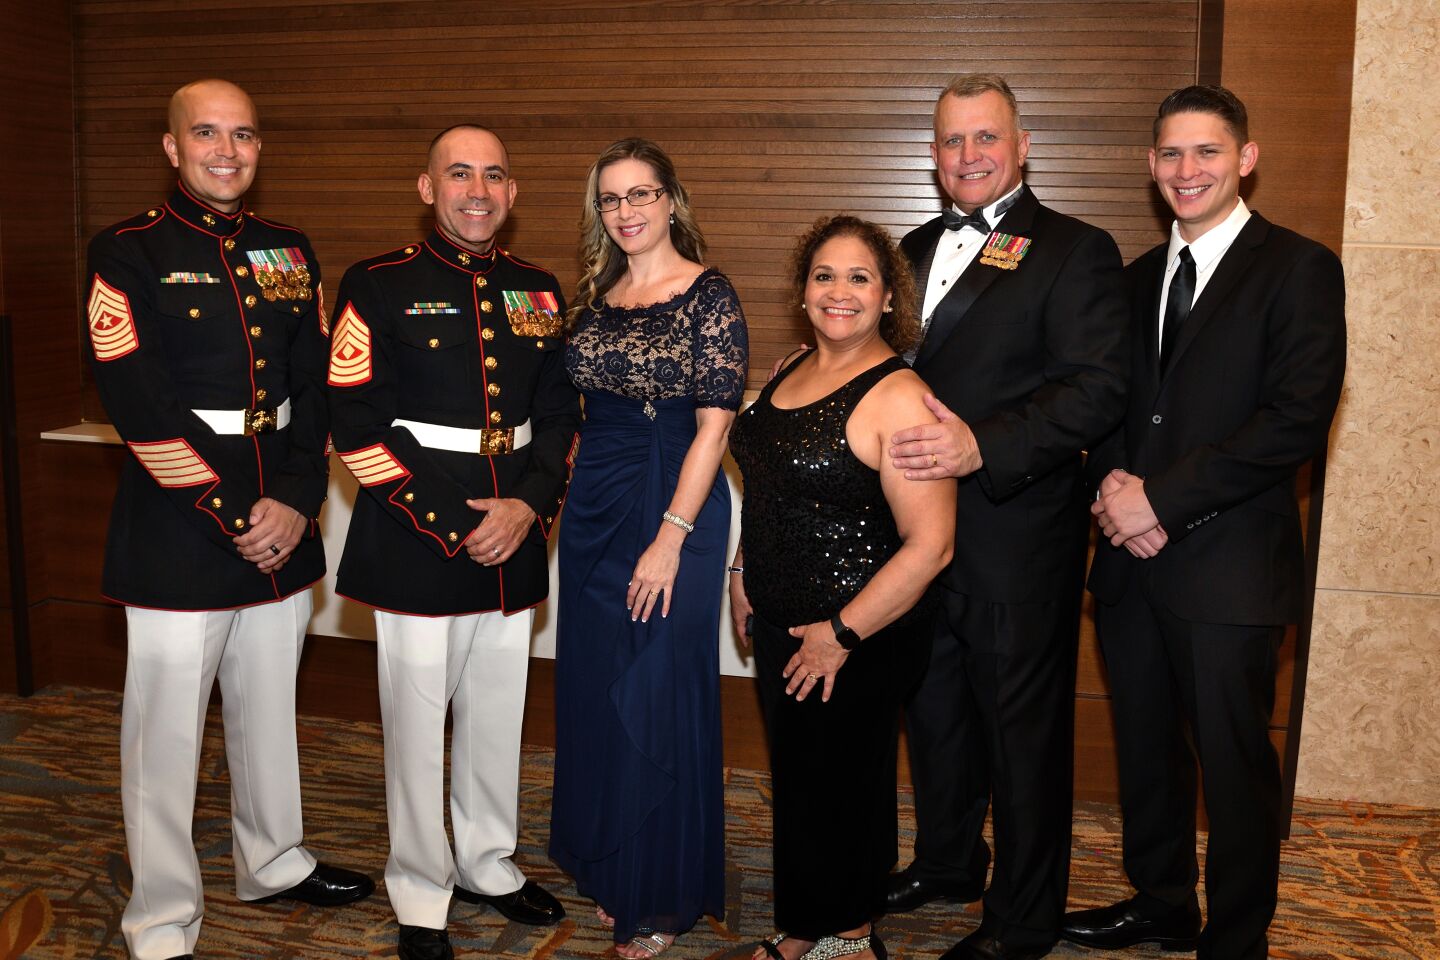 Eric Ramirez (Sgt. Major, USMC), Mike Reyes (1st Sgt., USMC) and Sonya Reyes, Elsa and Mark O'Loughlin, Mark O'Loughlin II